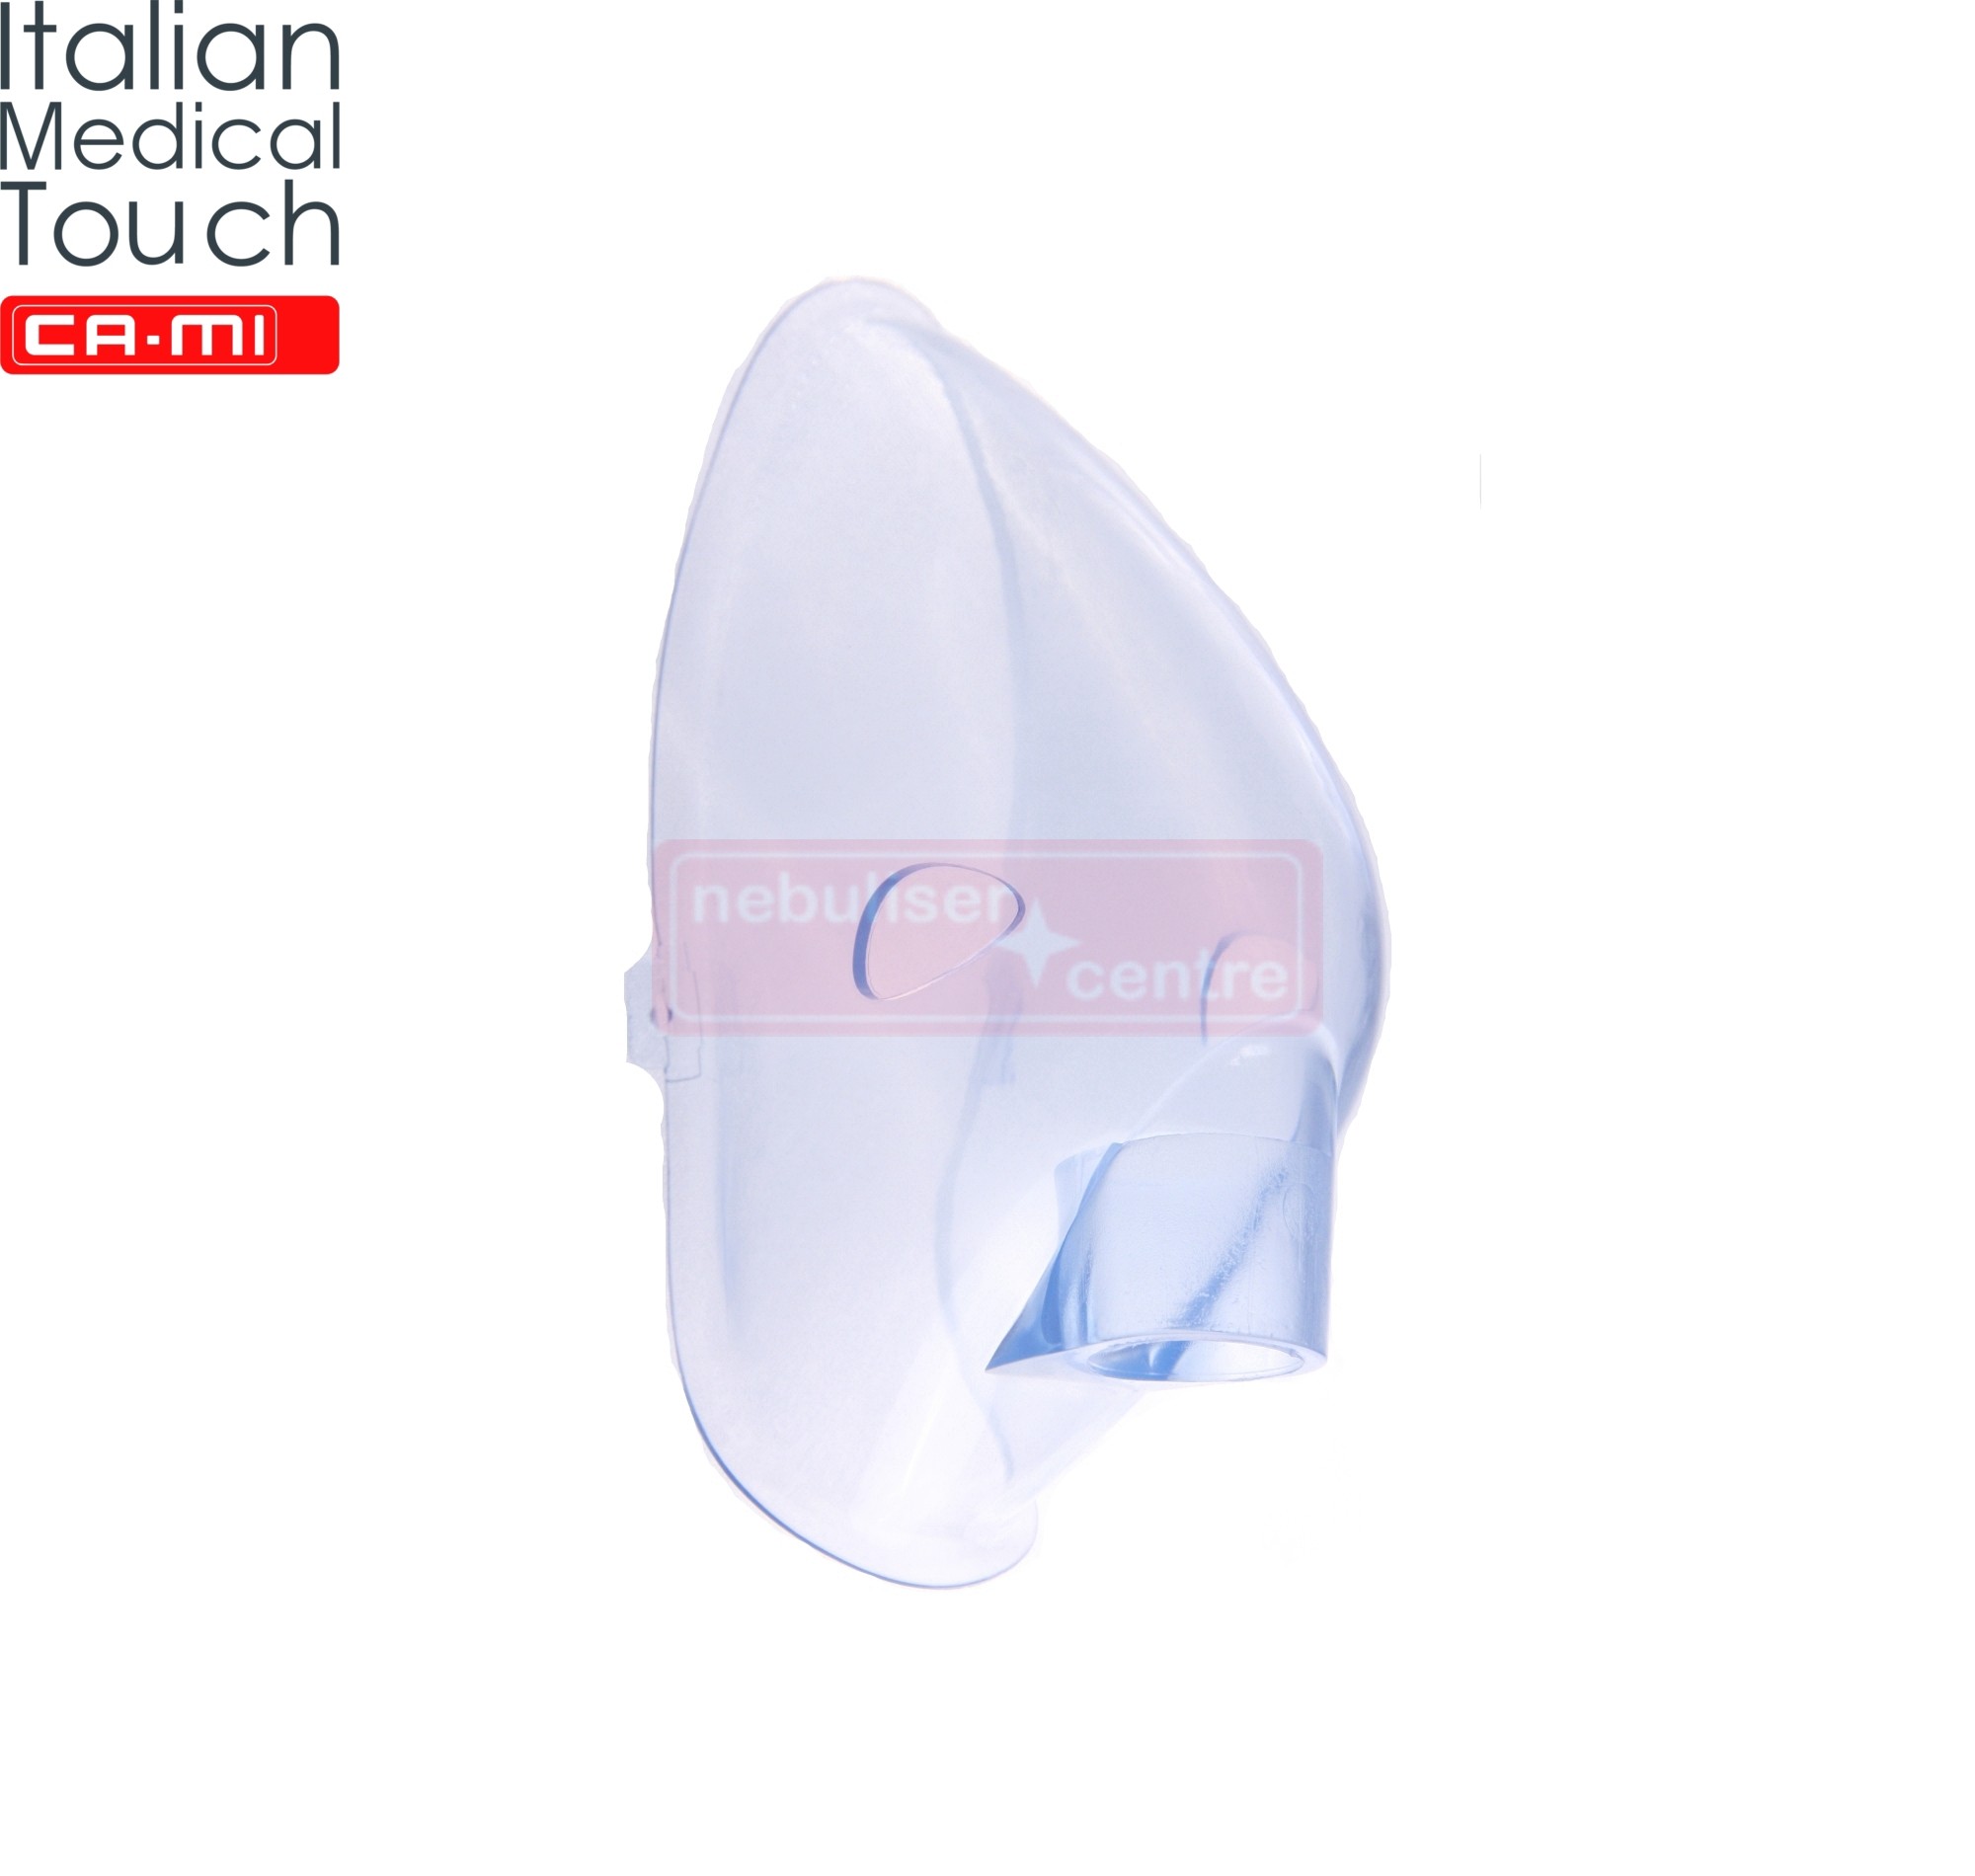 Nebuliser Mask for CA-MI HiFlo nebulisers - Adult Nebuliser Mask